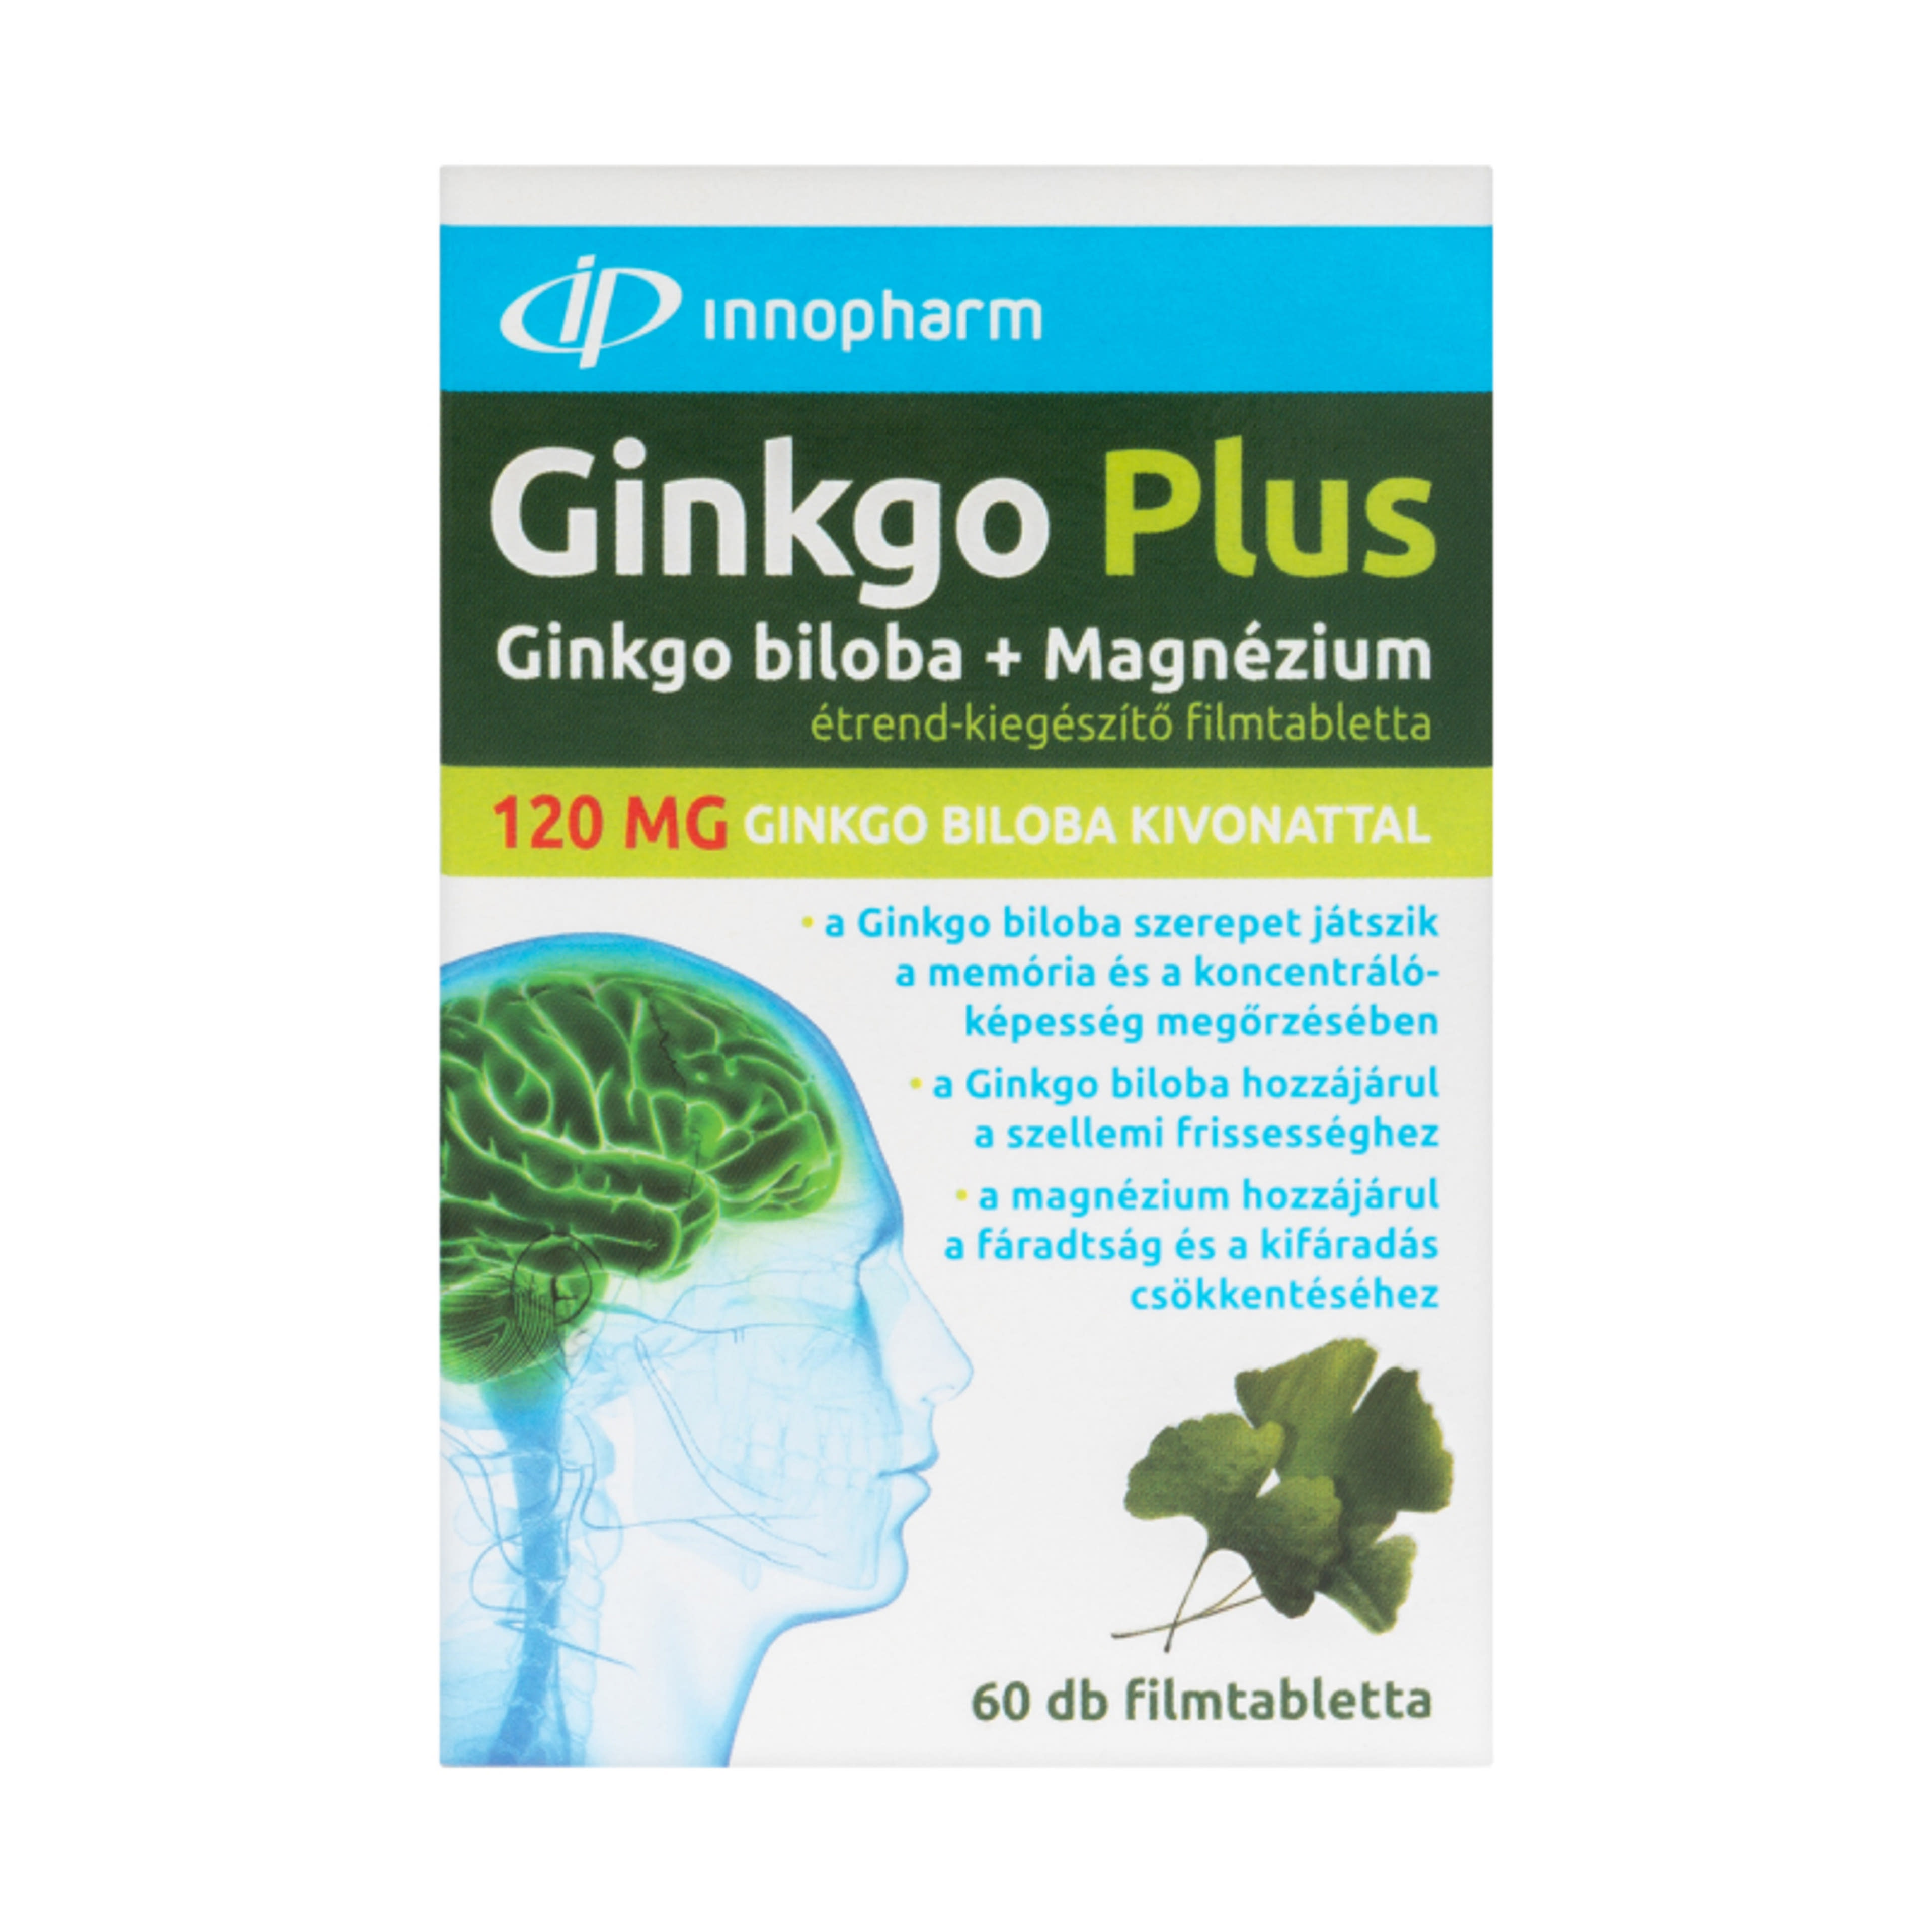 InnoPharm Ginkgo Plus Ginkgo biloba 120 mg + magnézium filmtabletta - 60 db-1